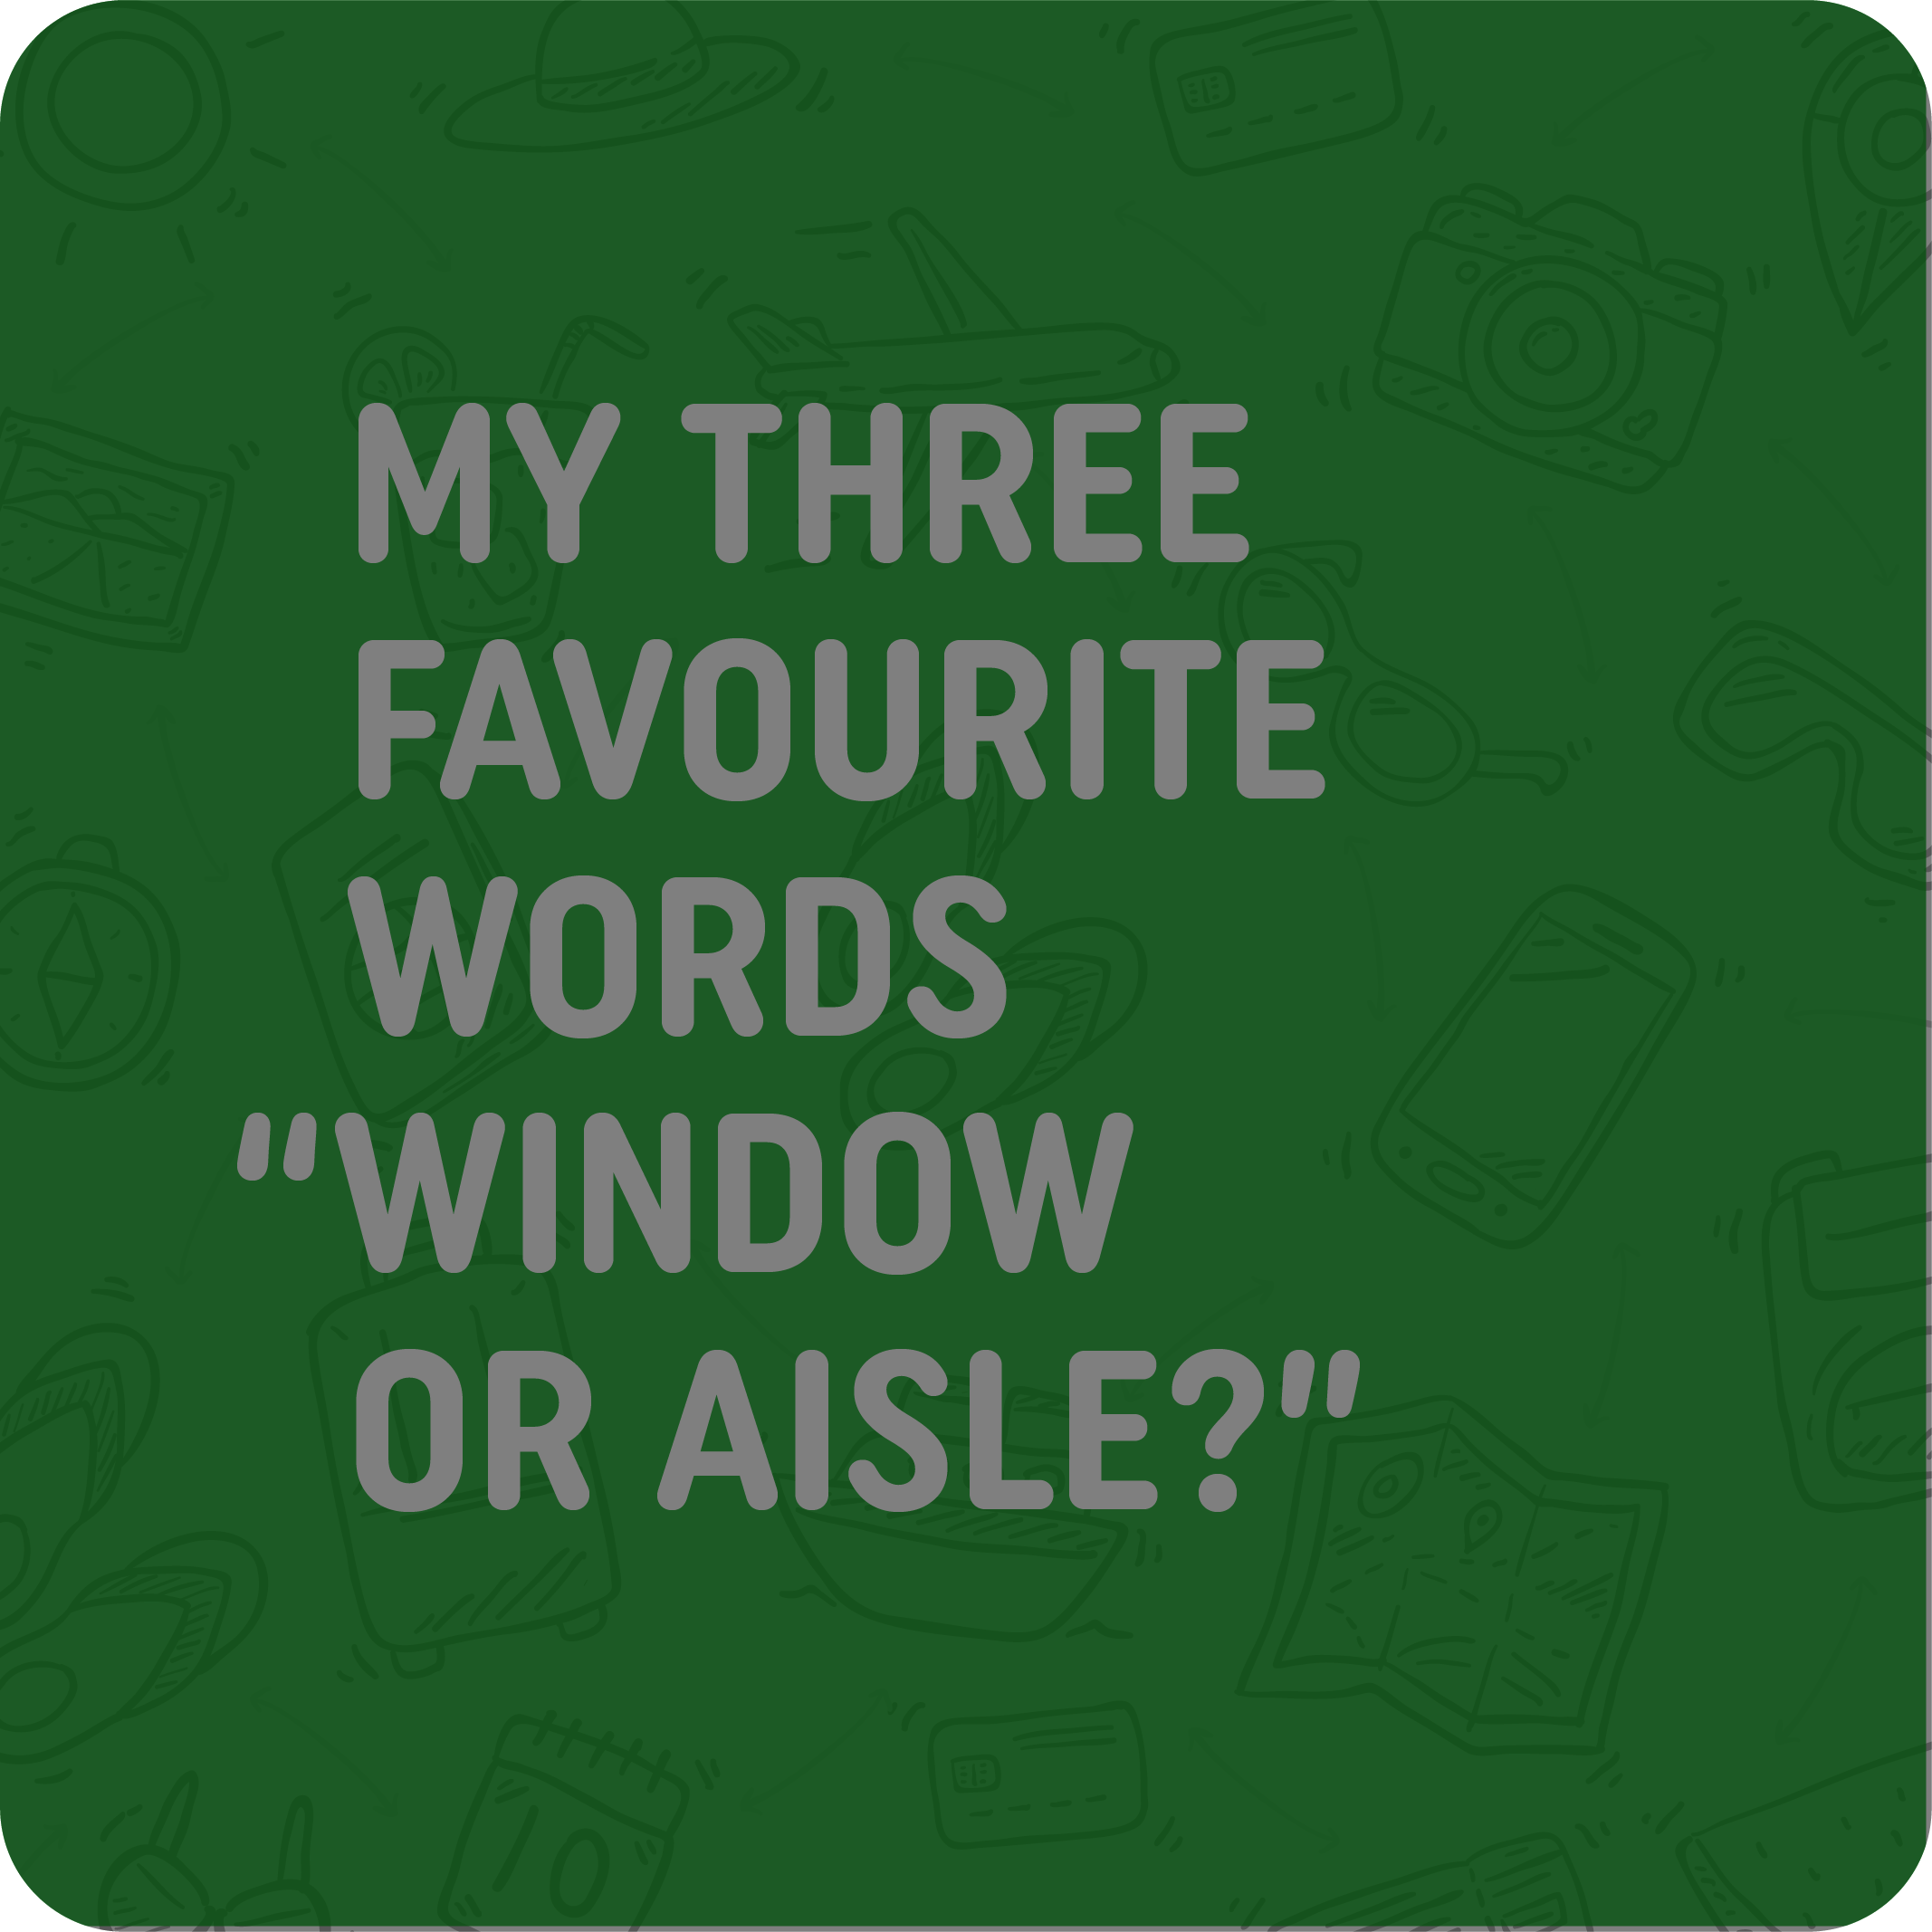 WINDOW OR AISLE !